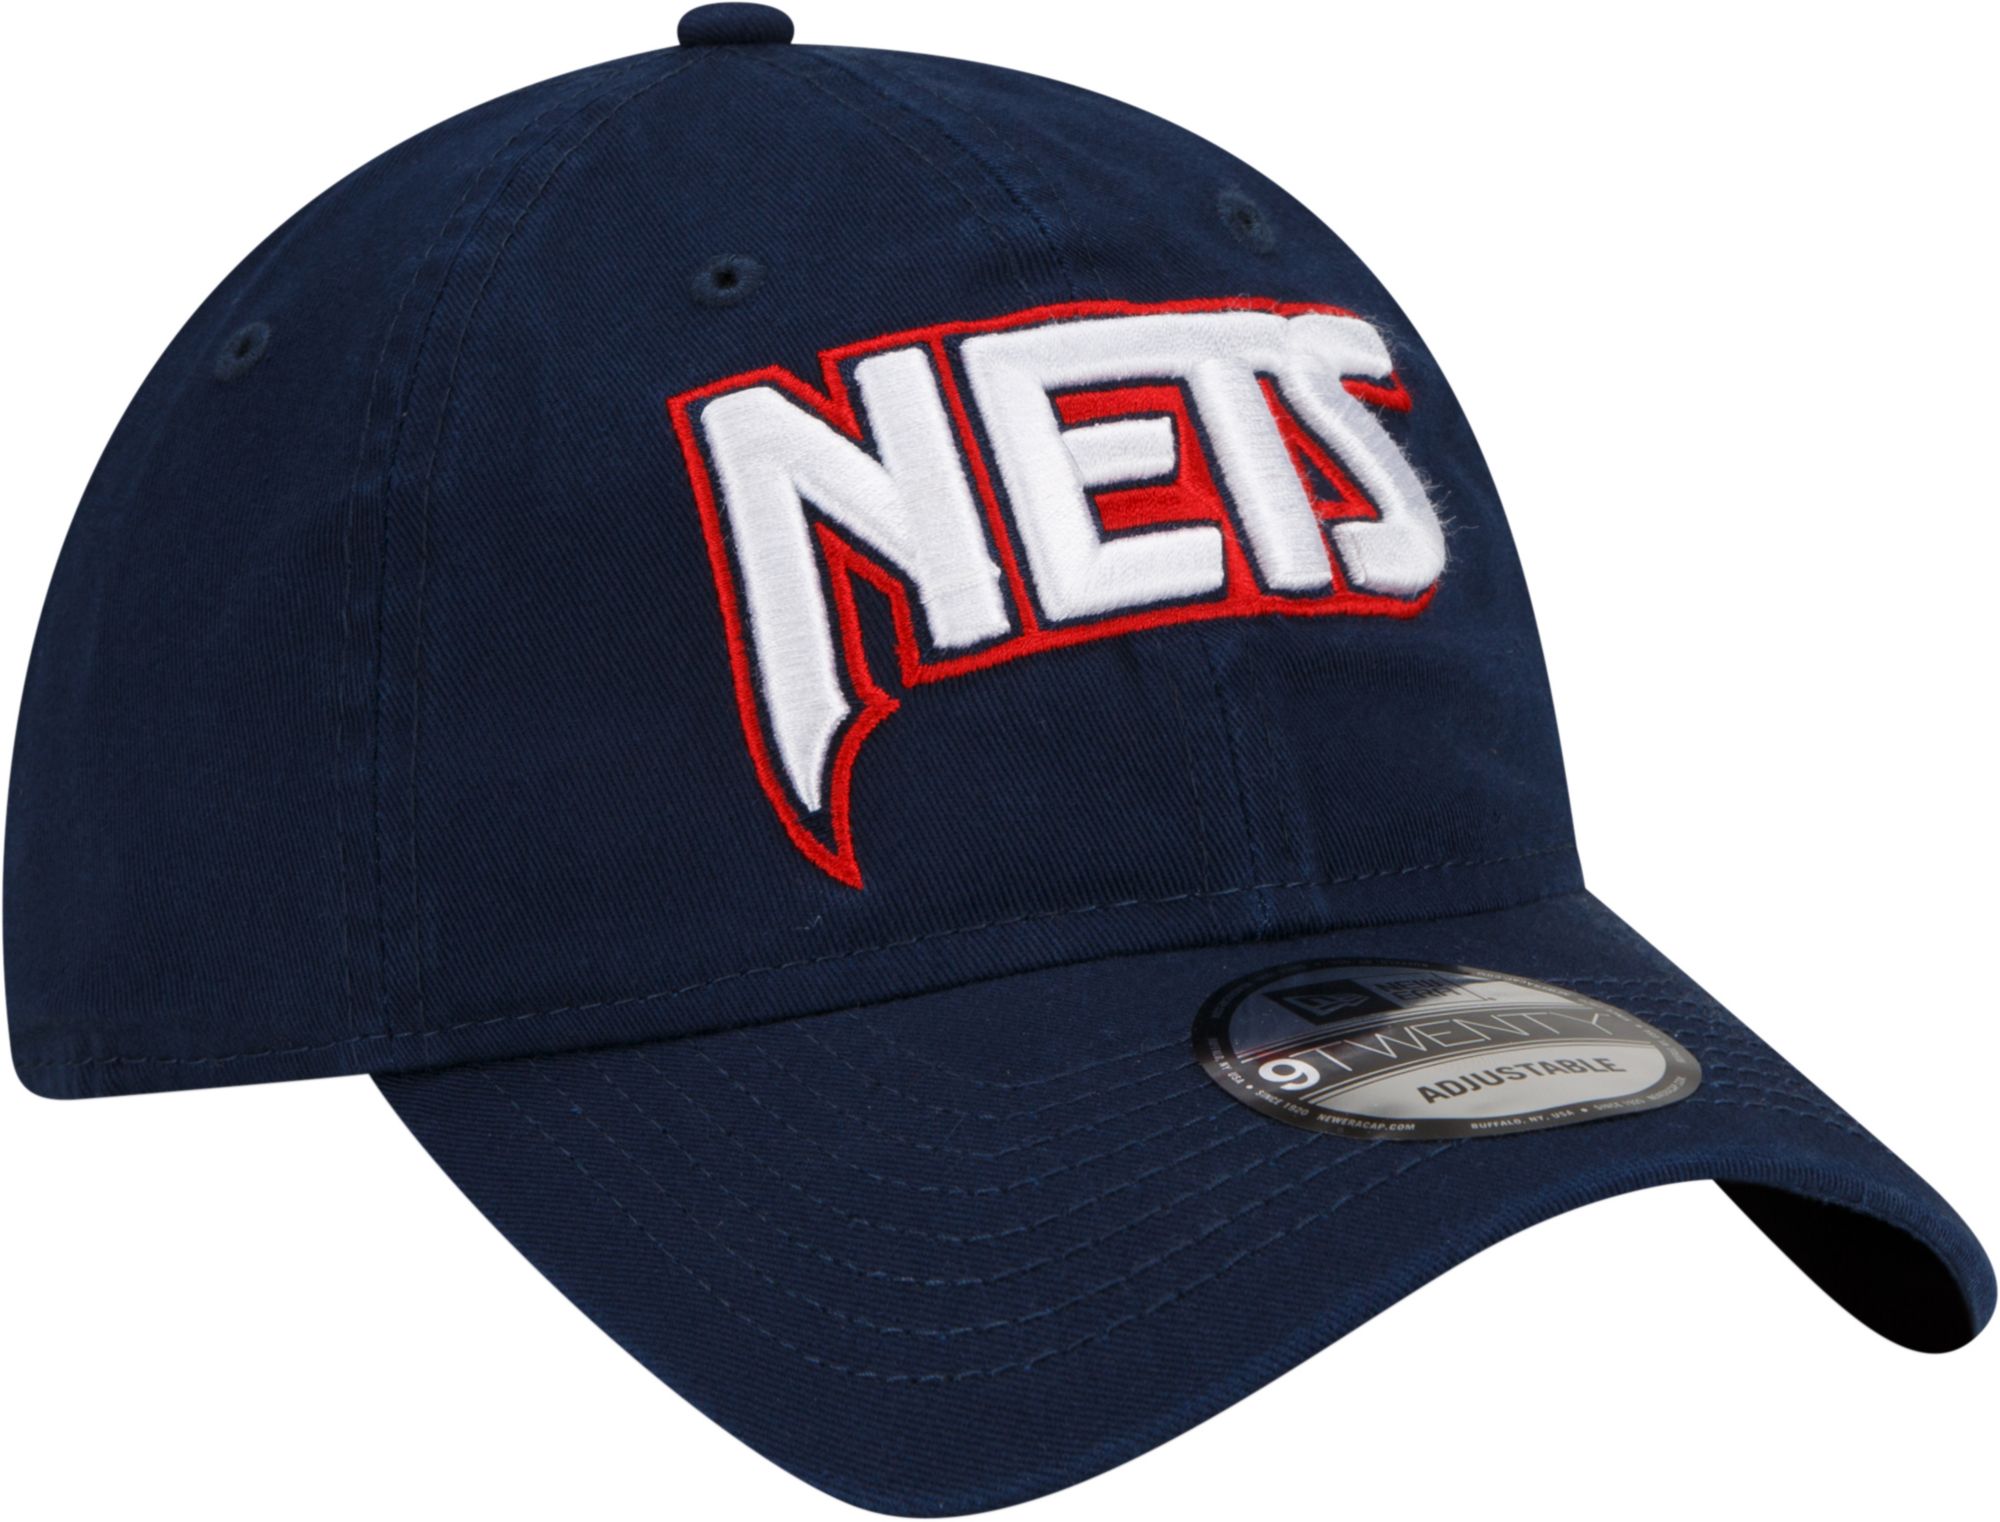 New Era, Accessories, New Era Nba New Jersey Nets Hat